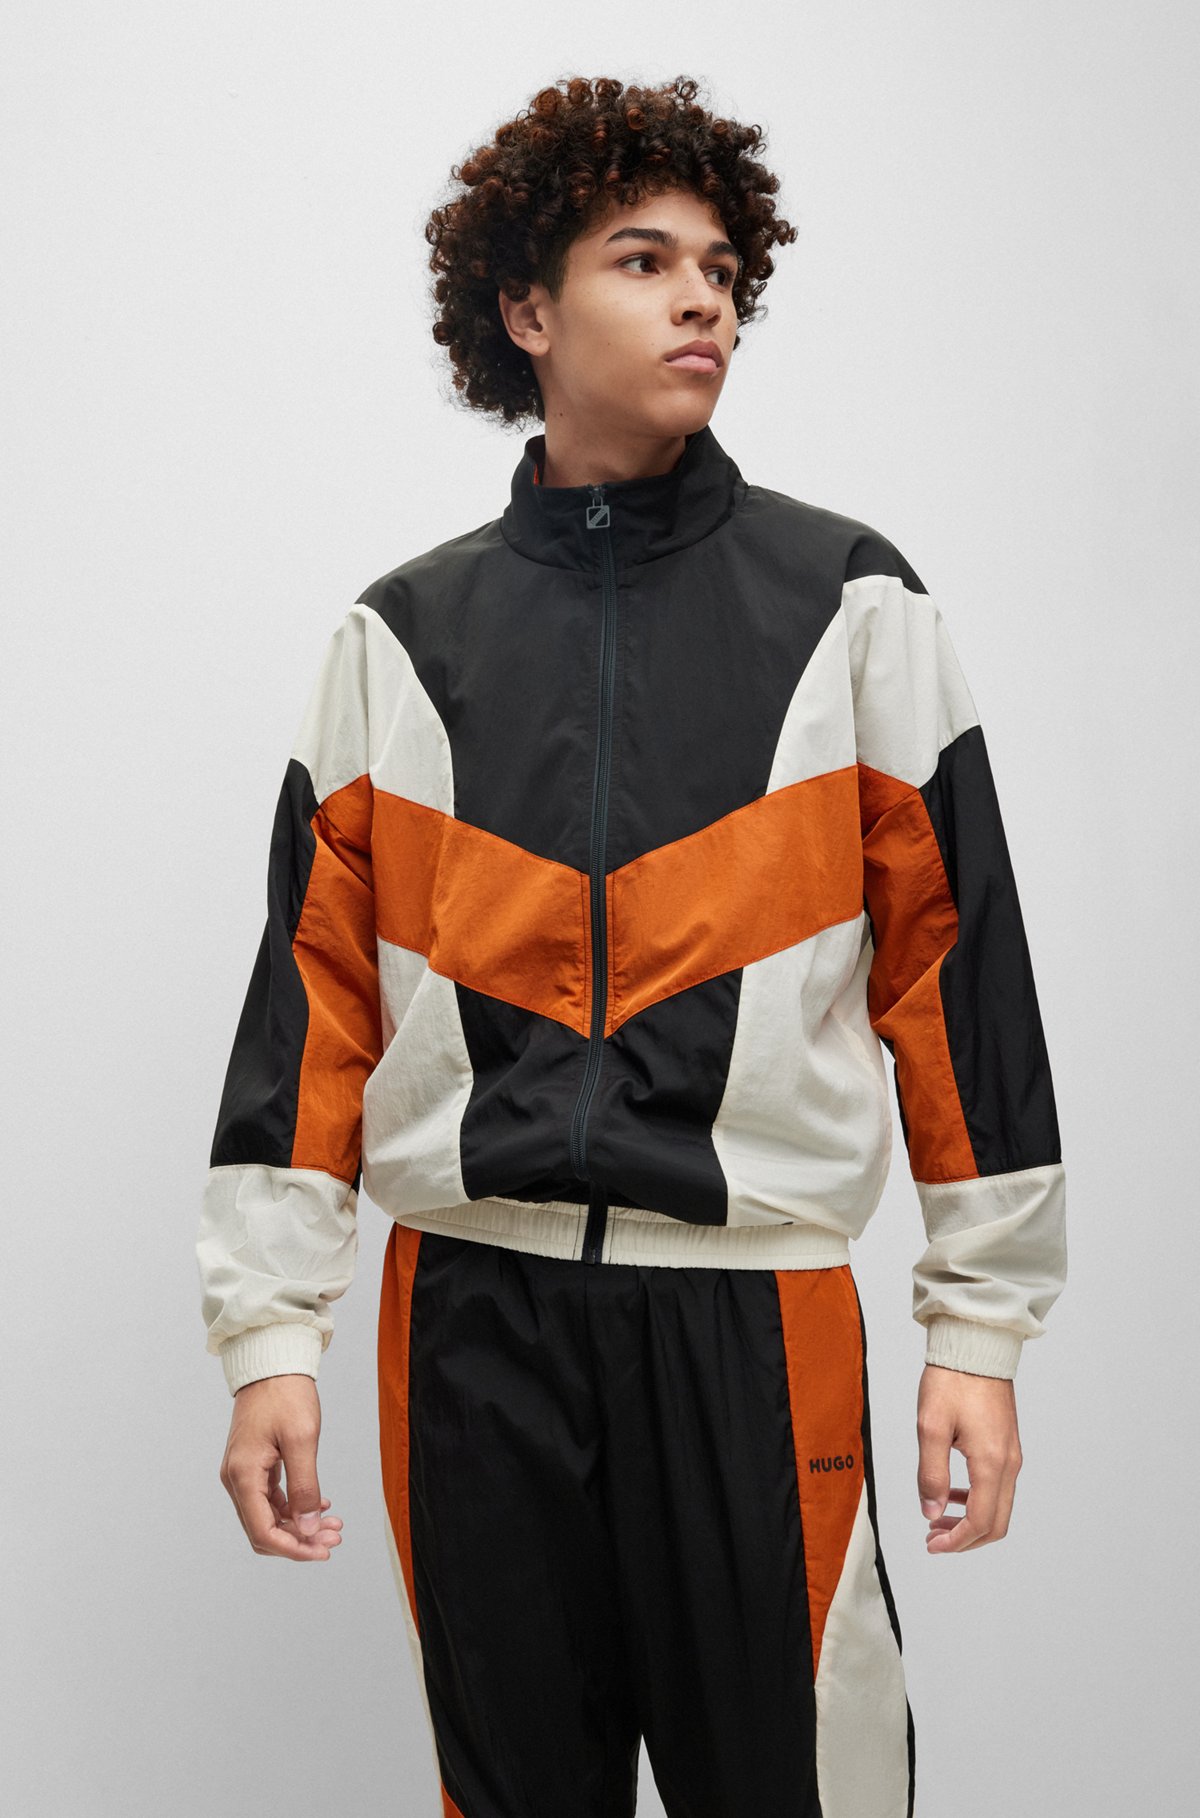 Colour-blocked zip-up jacket with logo print, Black